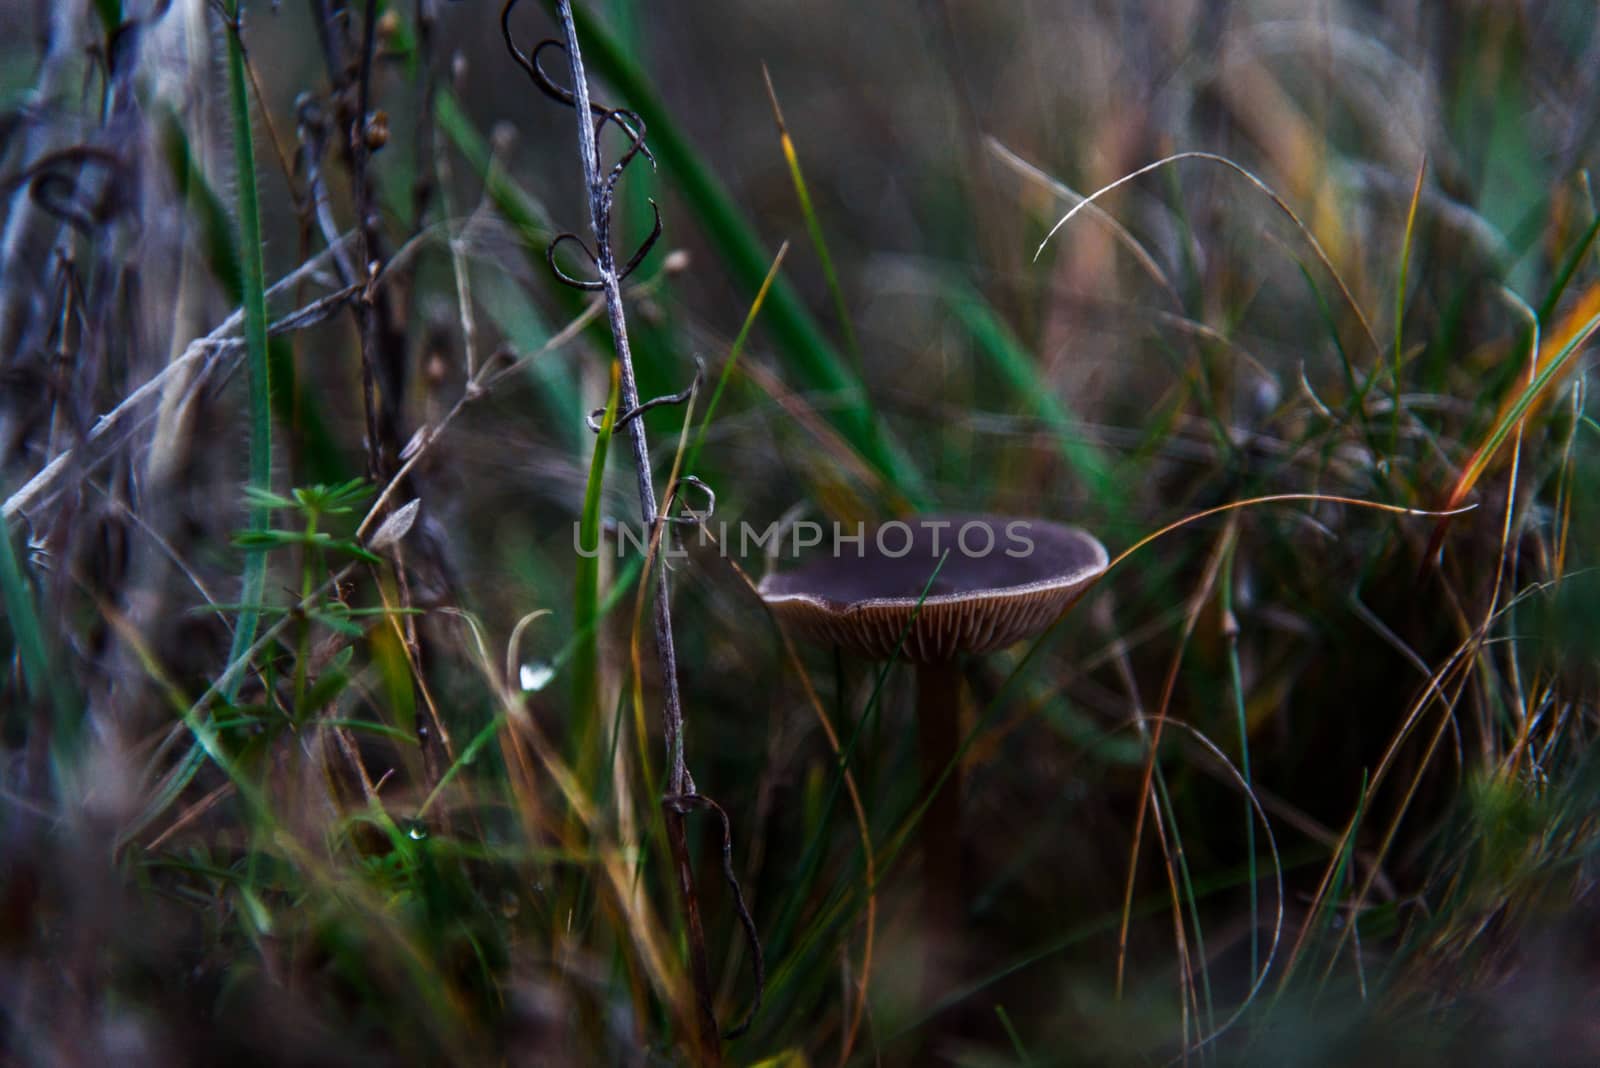 Mushroom grey little in the grass closeup